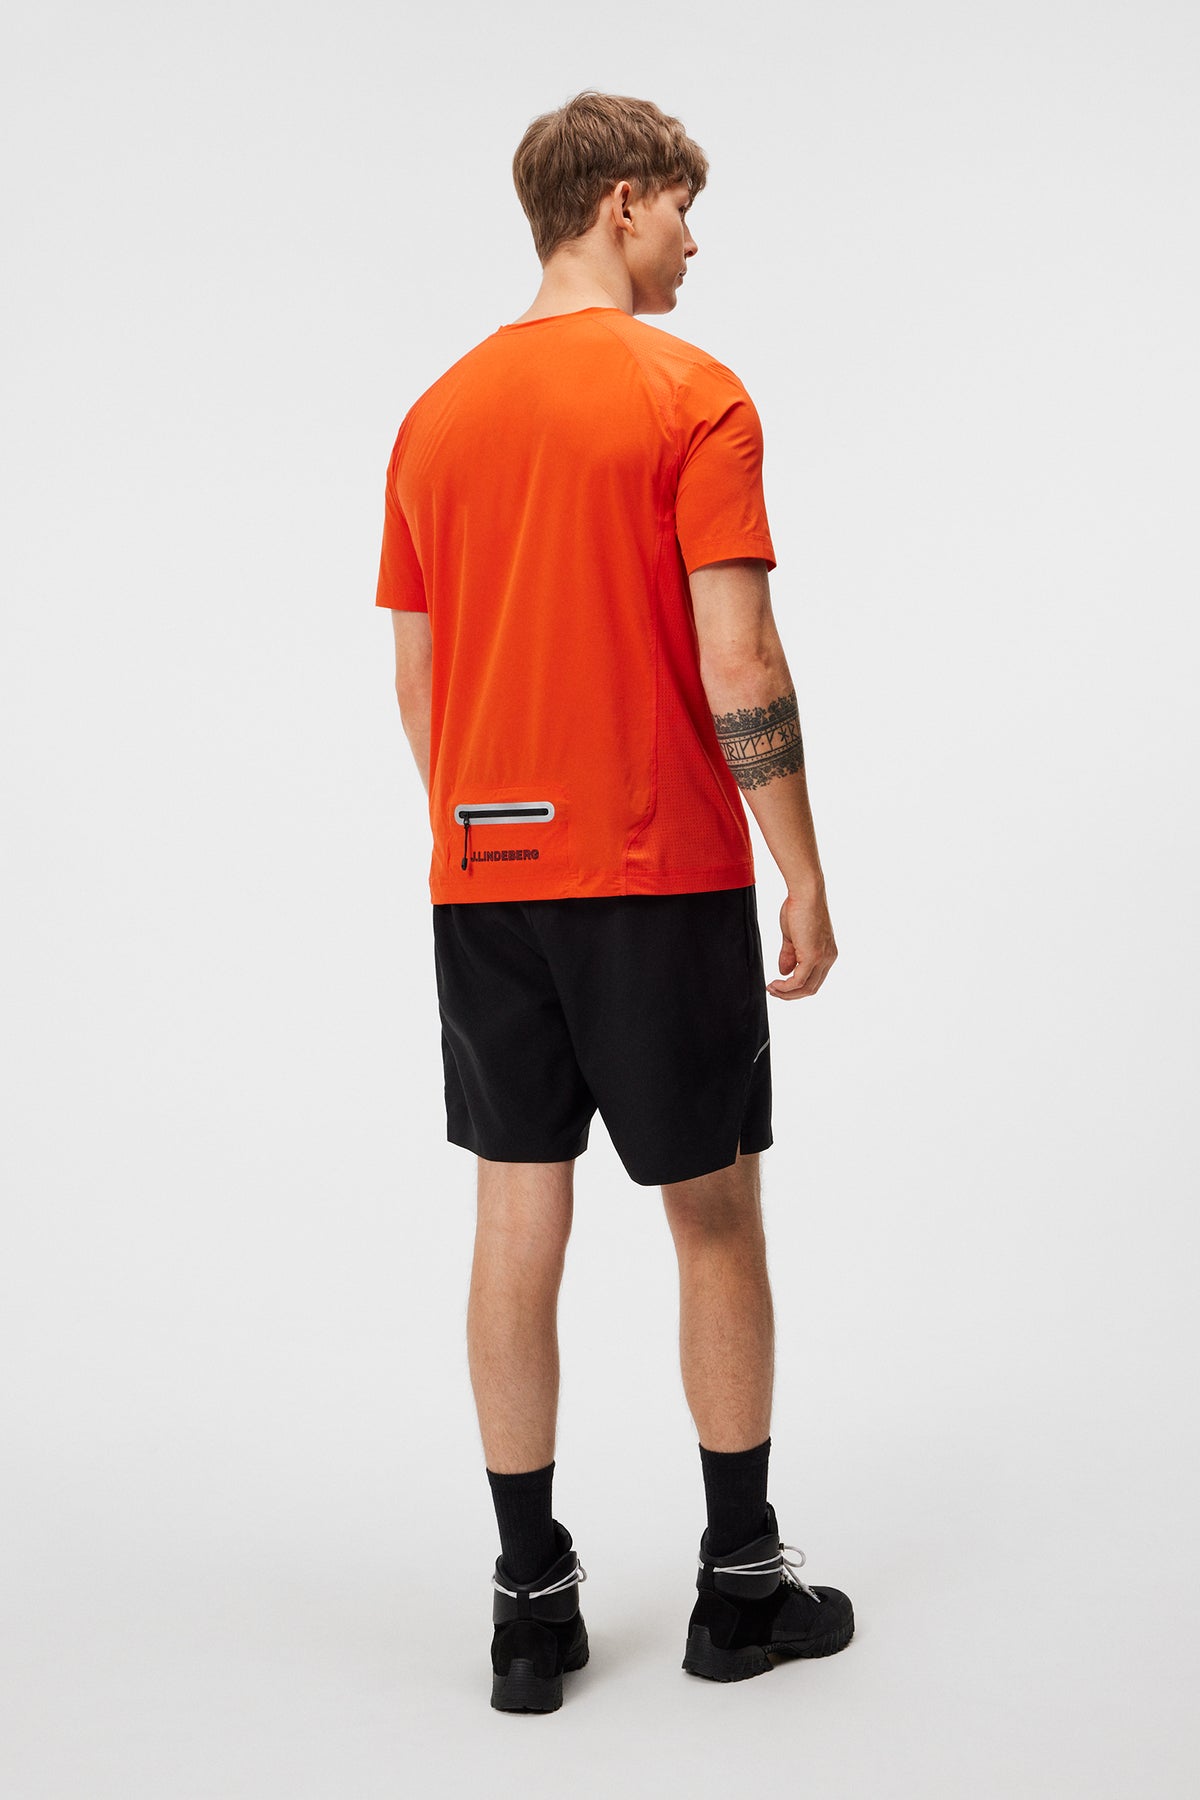 Tomas Pro Pack T-Shirt / Tangerine Tango